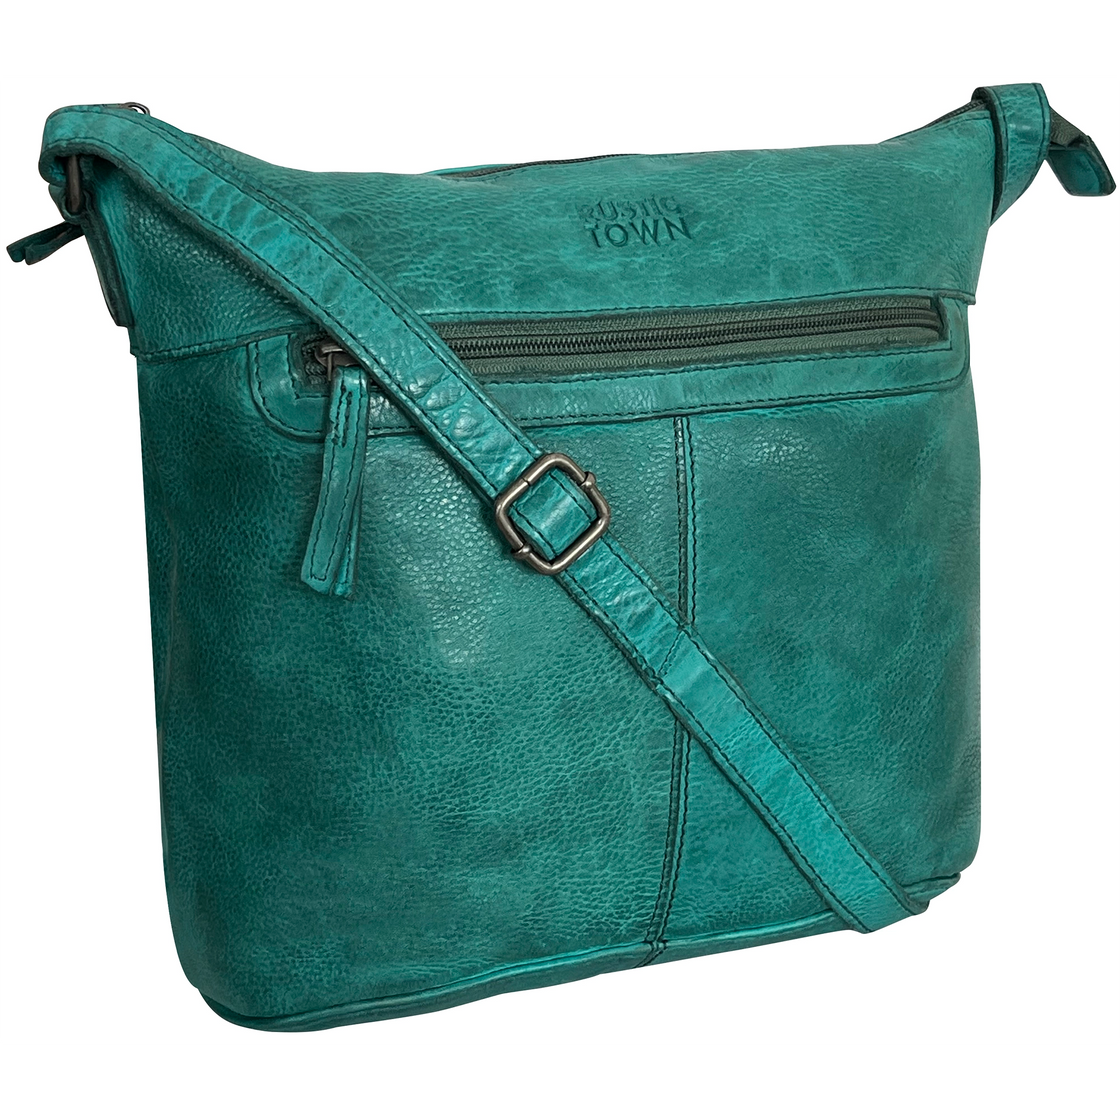 Leather Sling Bag for Women, Green